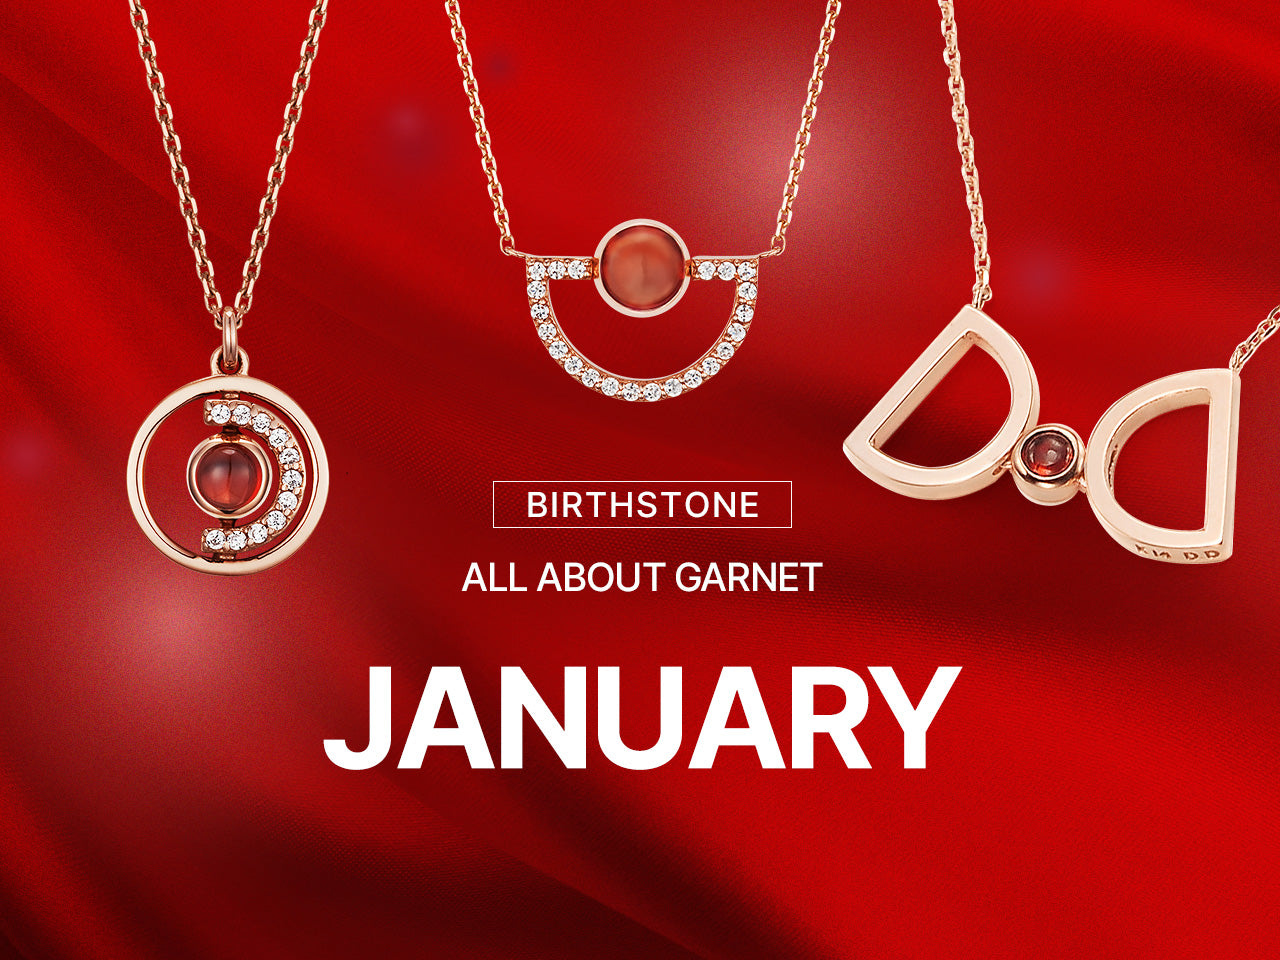 January Birthstone: All About Garnet